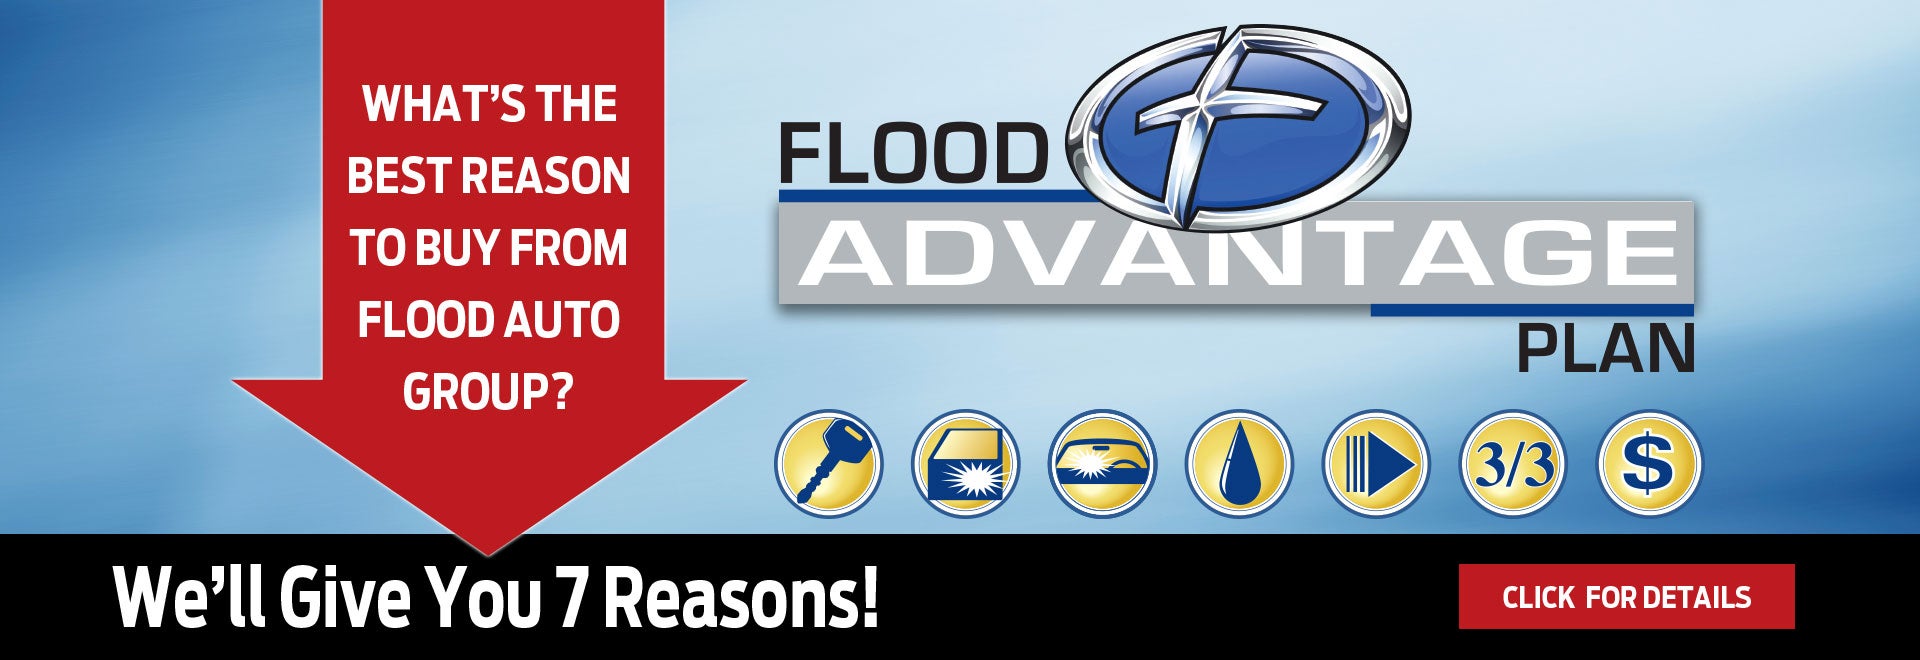 Flood's Advantage Plan